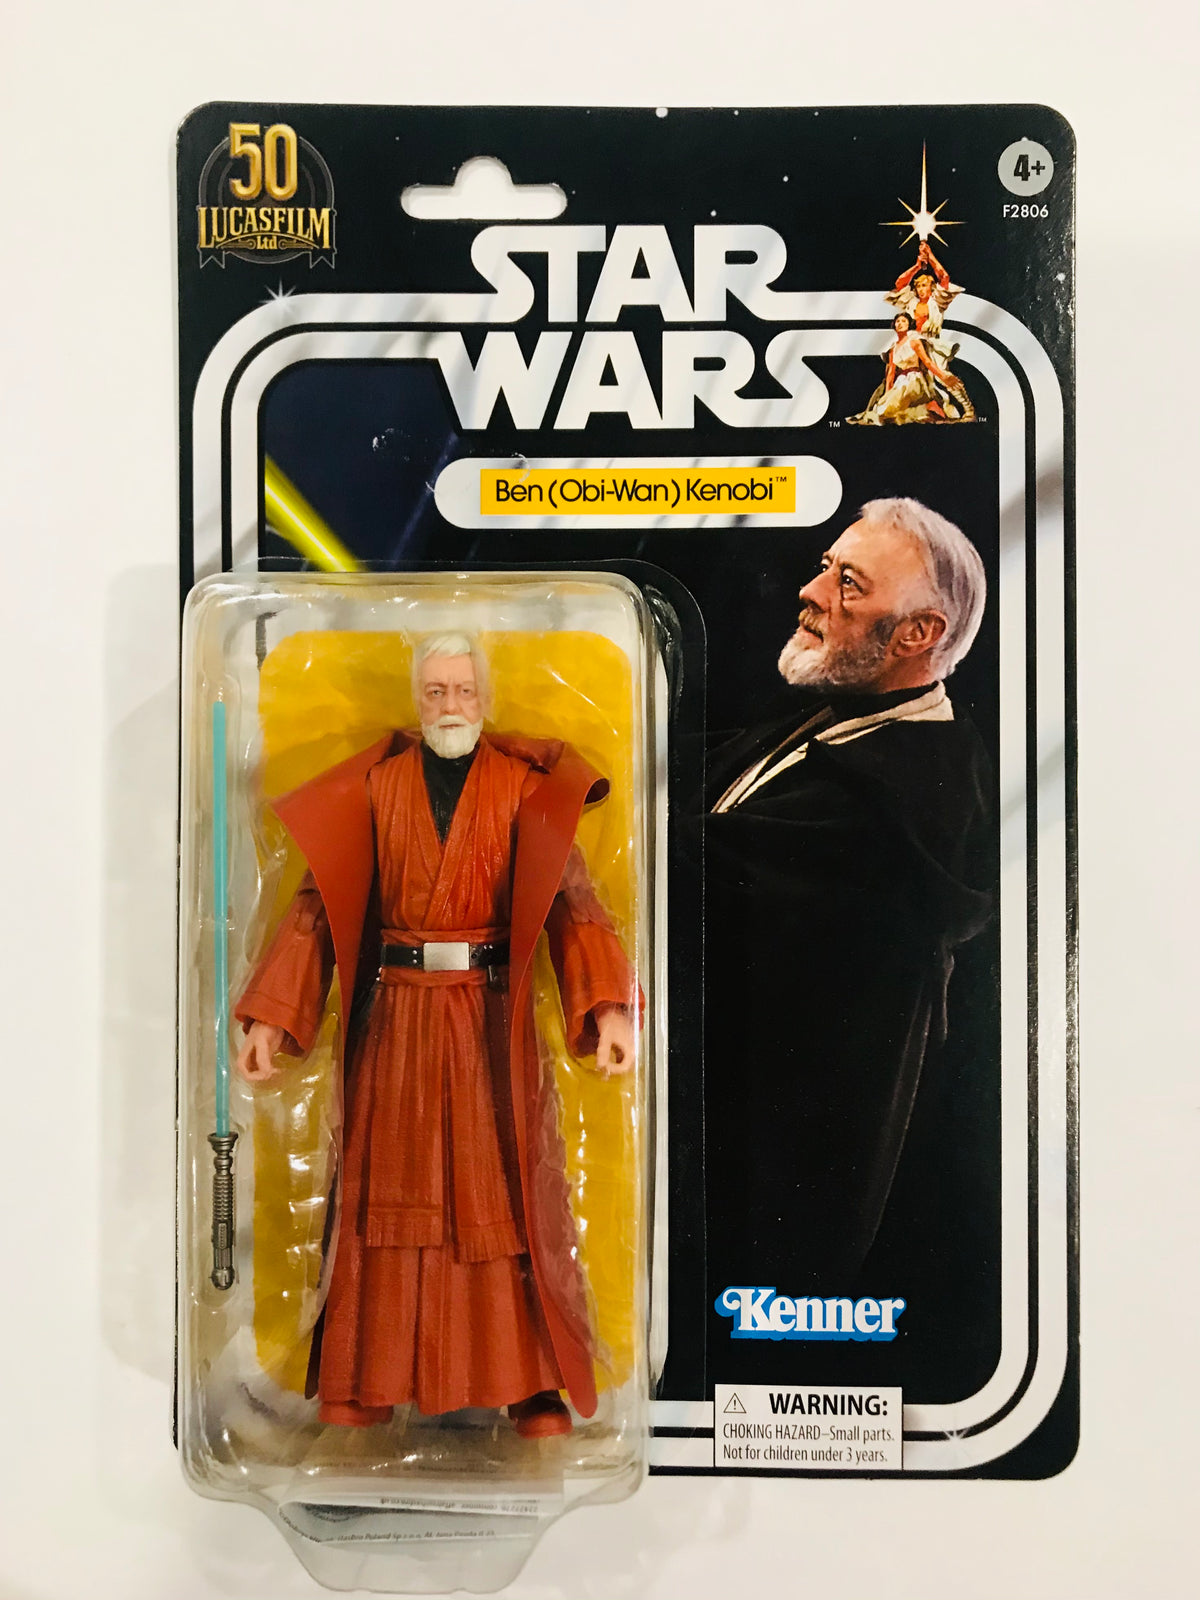 Ben (Obi-Wan) Kenobi #50 Anniversary